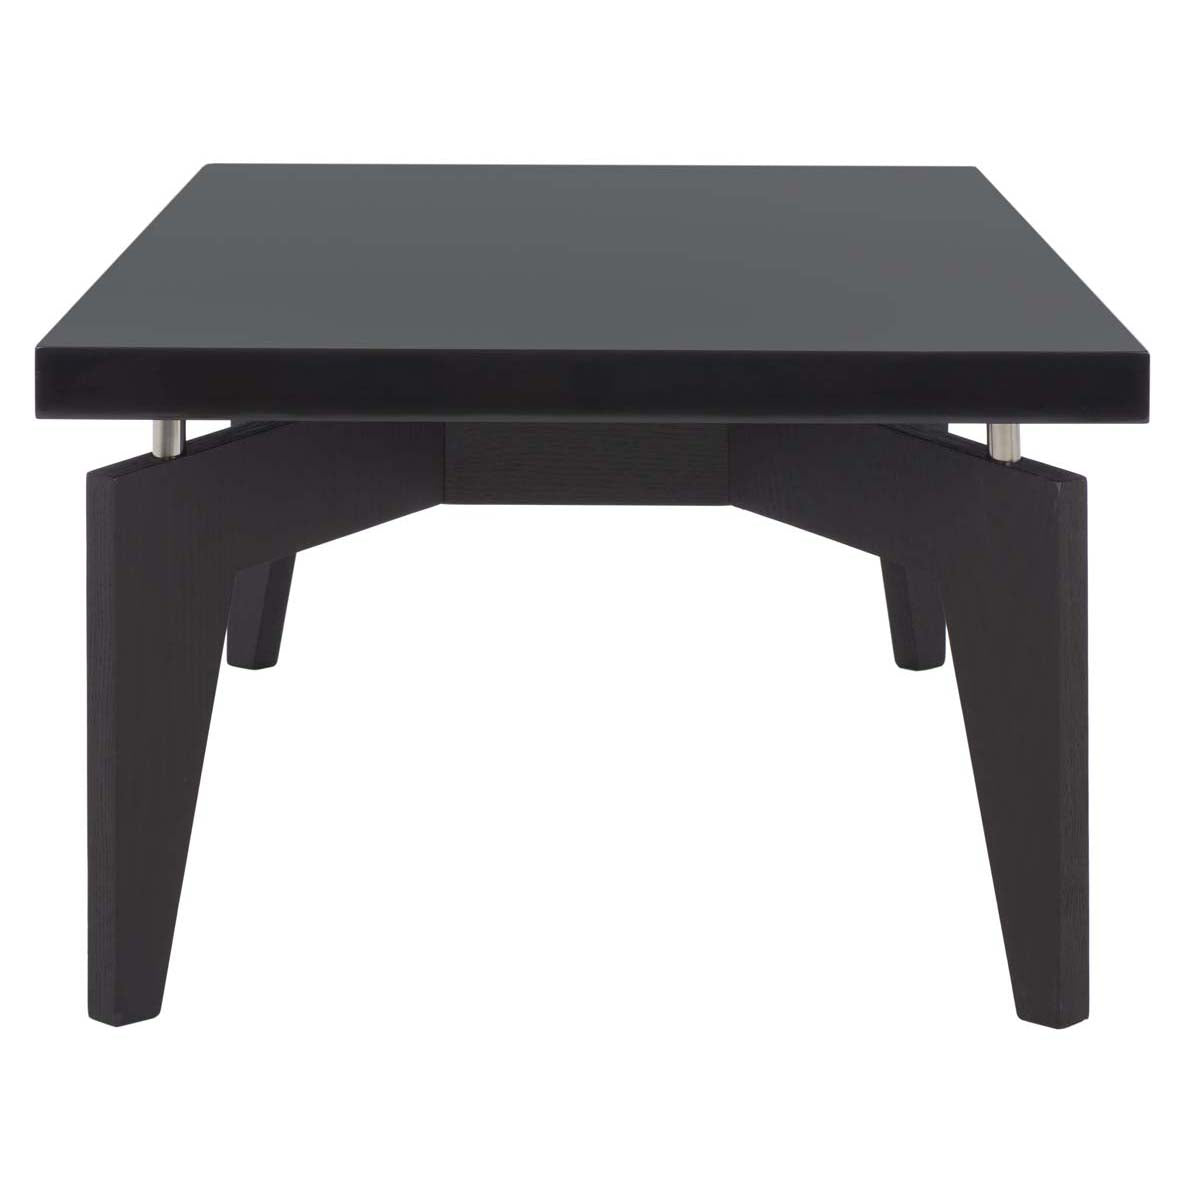 Safavieh Josef Retro Lacquer Floating Top Coffee Table , FOX4223 - Black/Black